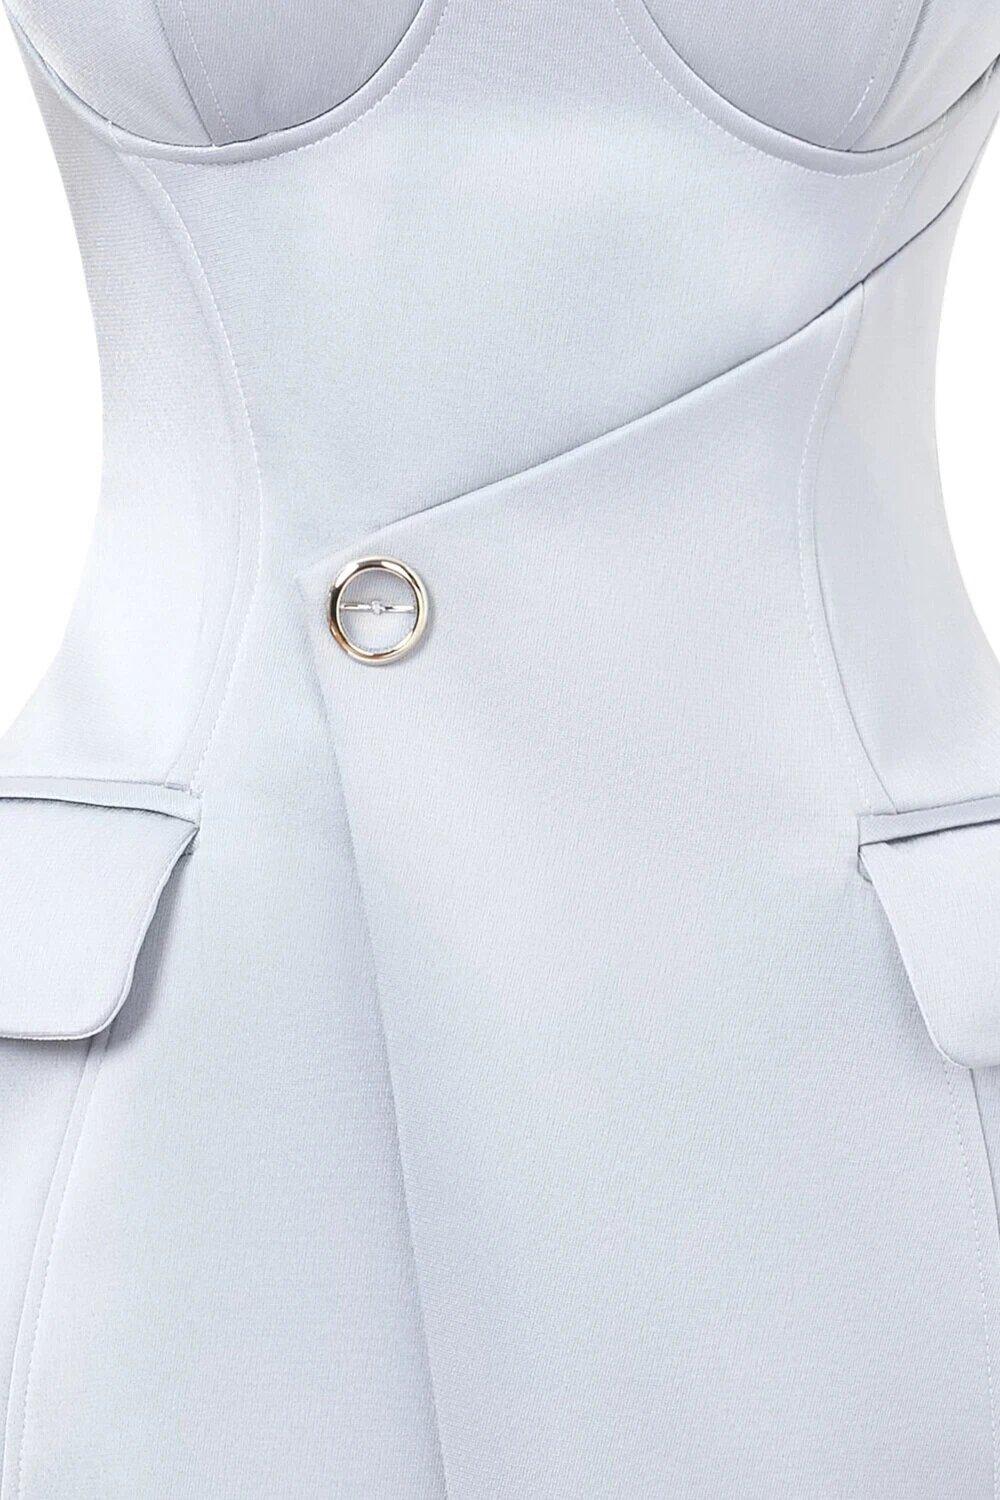 Designer Cami sphagetti sleeve blouse top - Gemma